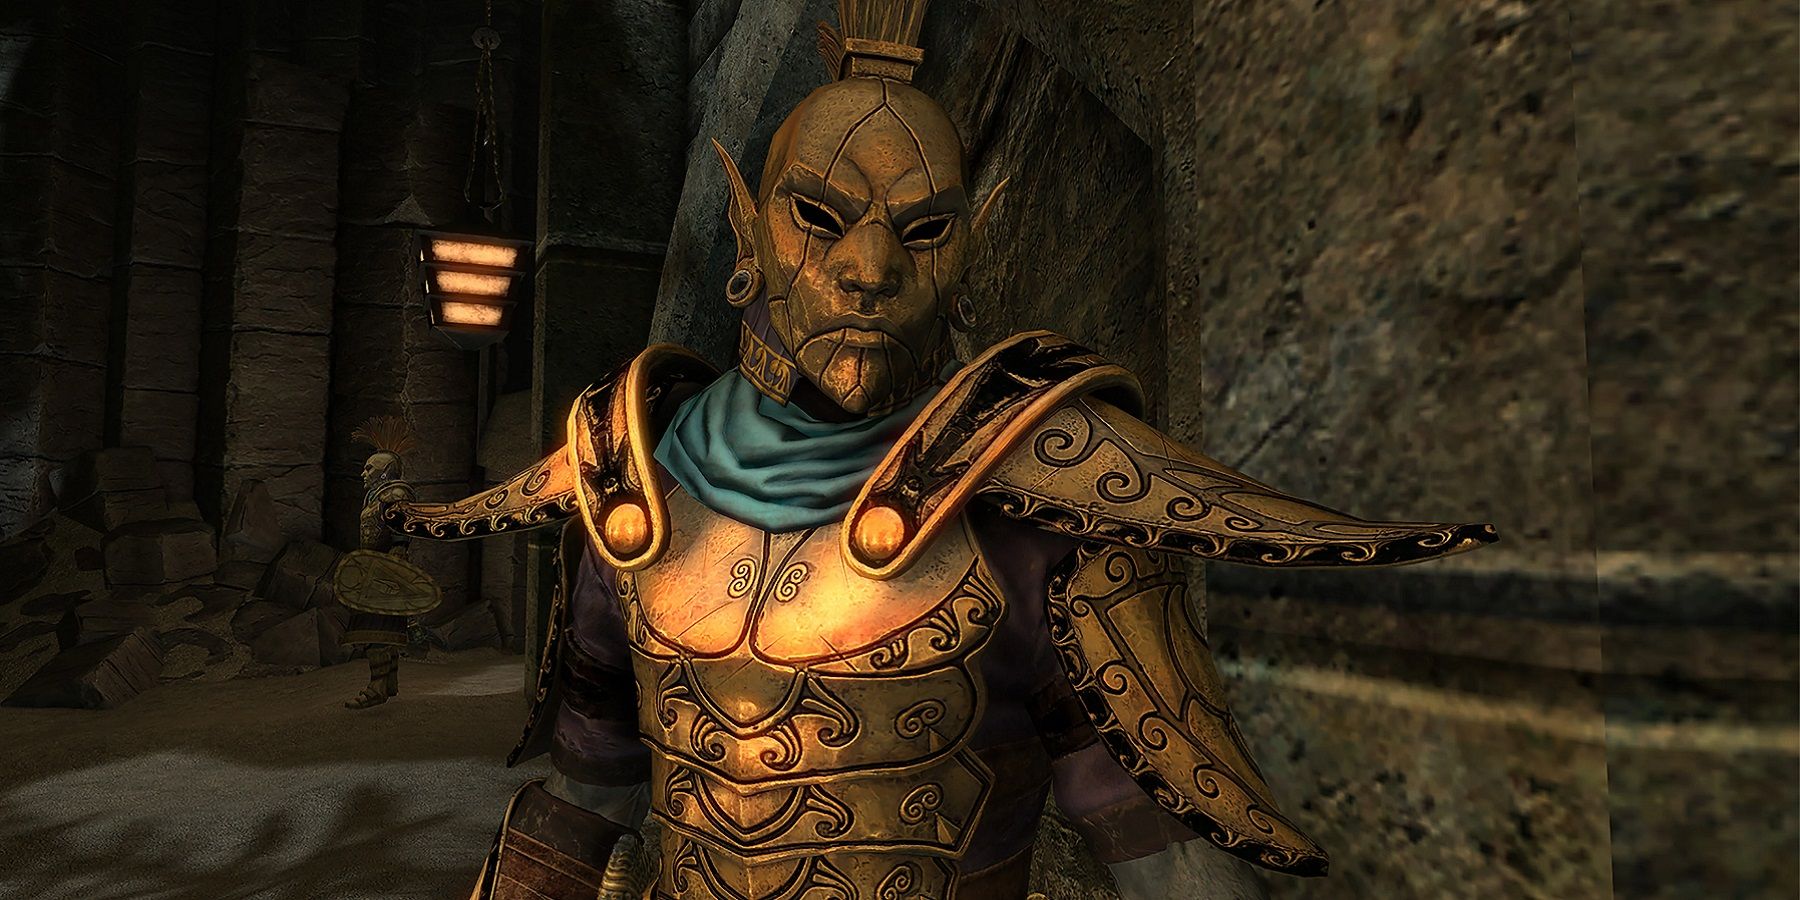 Image from The Elder Scrolls 5: Skyrim showing a guard wearing Bonemold armor.